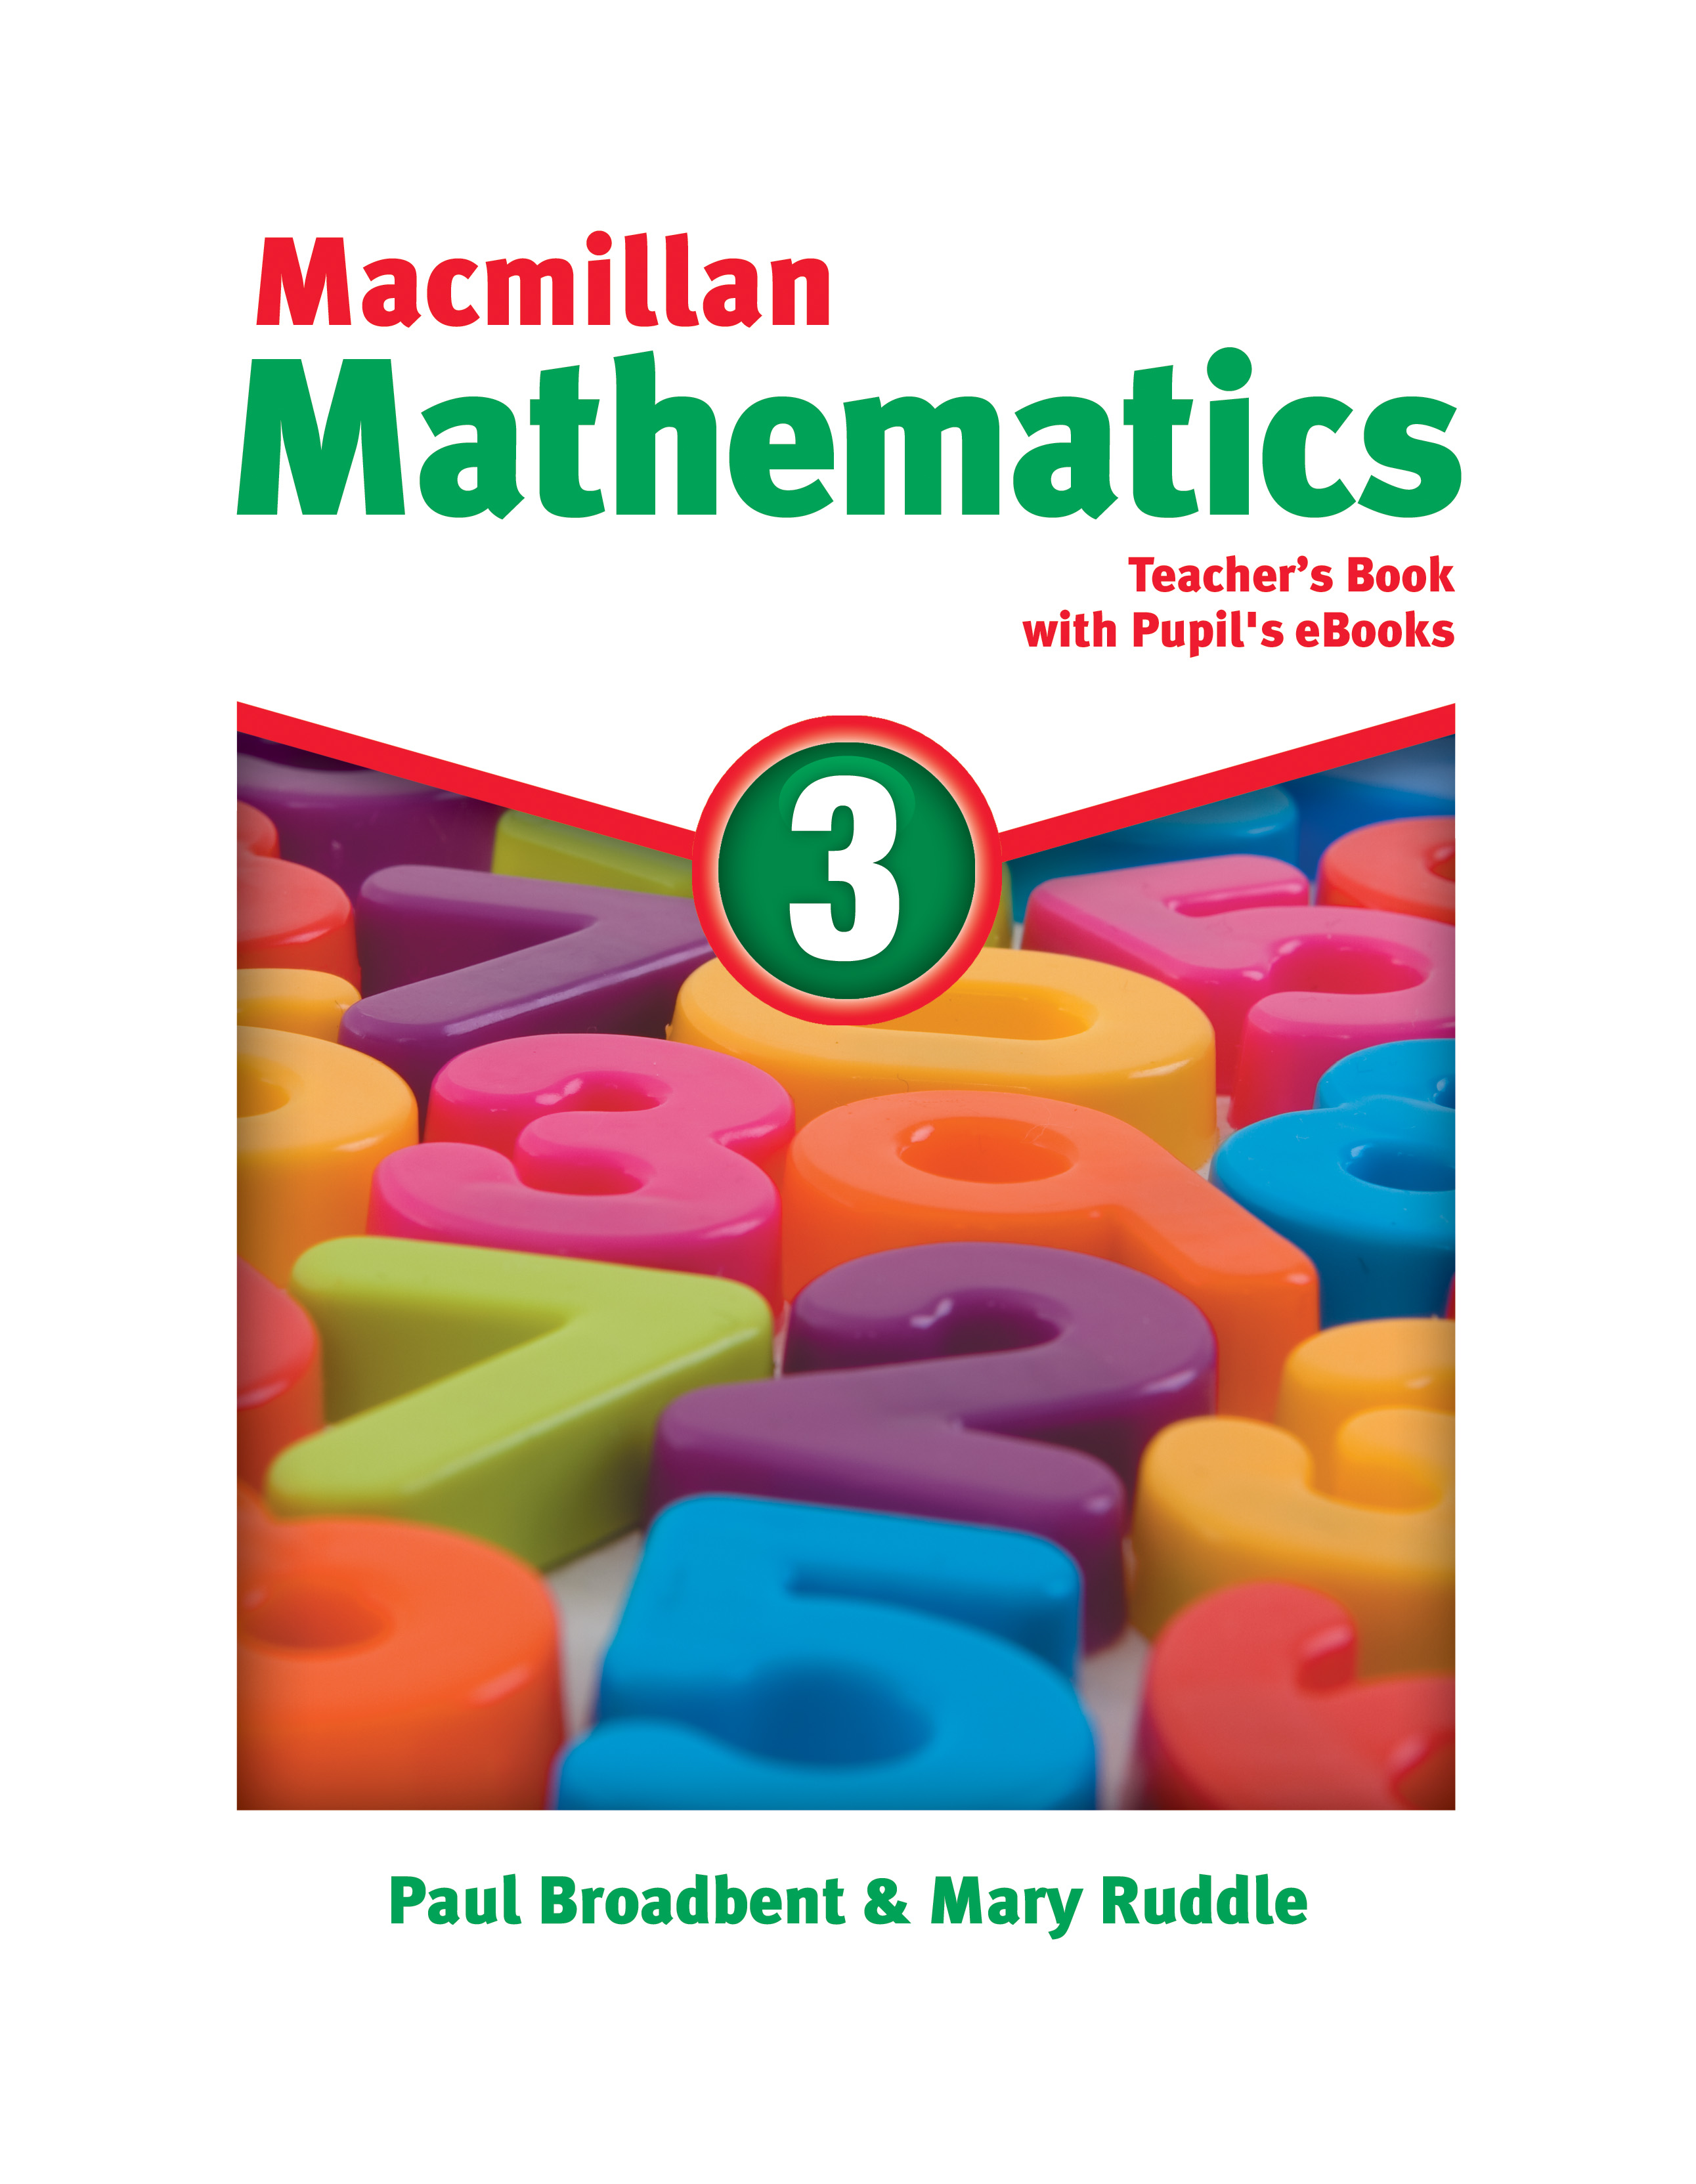 Macmillan s book. Математика на английском. Матнмаиикп не английский. Macmillan Mathematics. Math teacher книга.